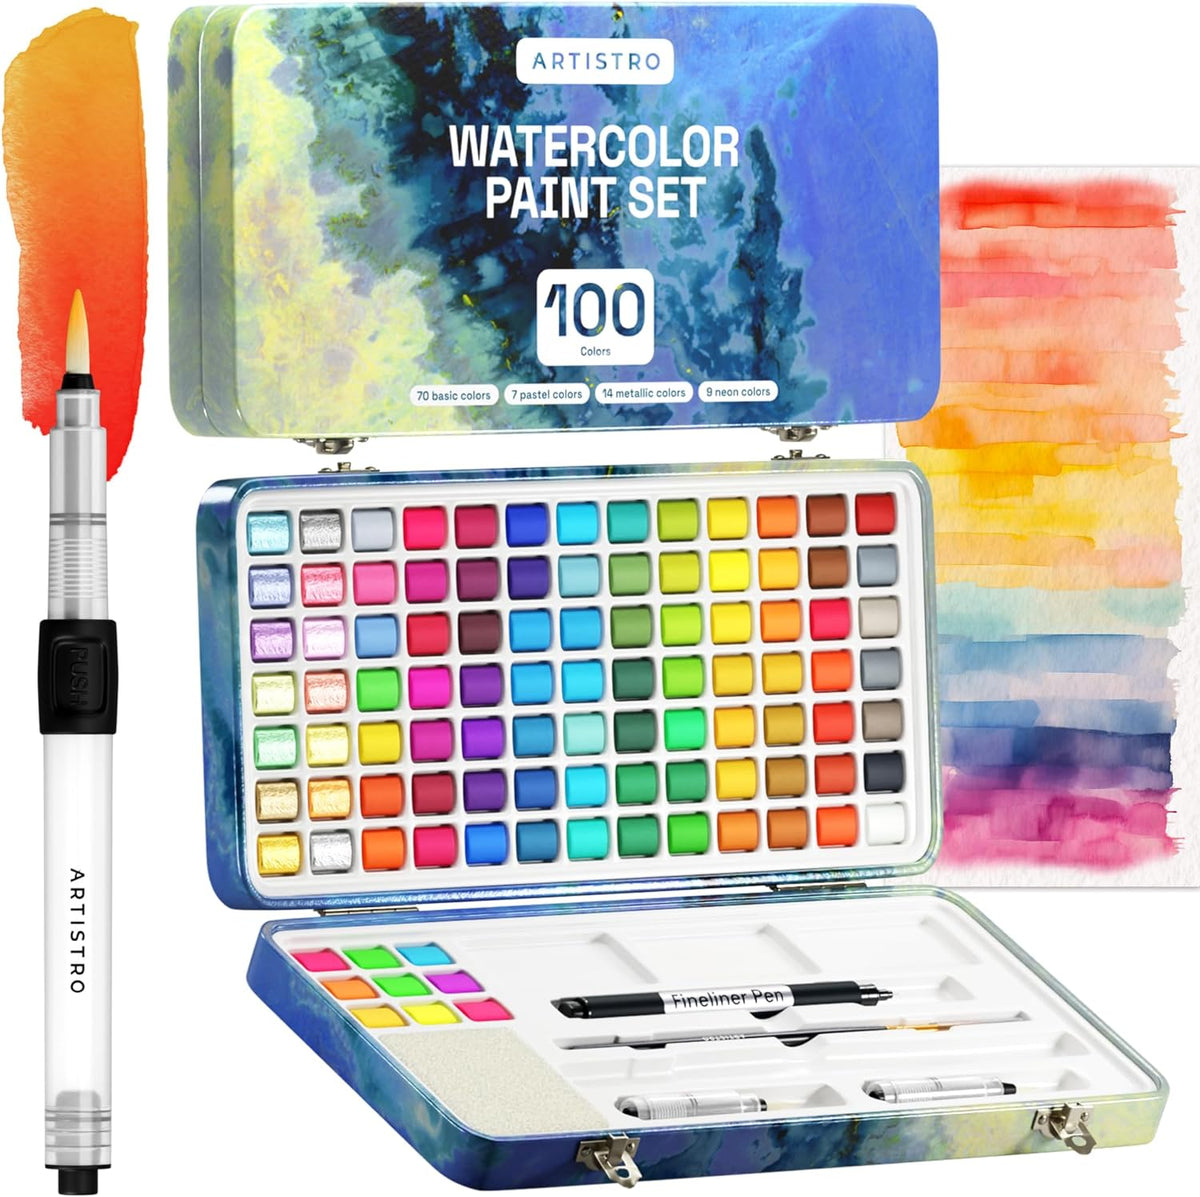  Grabie Watercolor Paint Set, 100 Colors Painting with